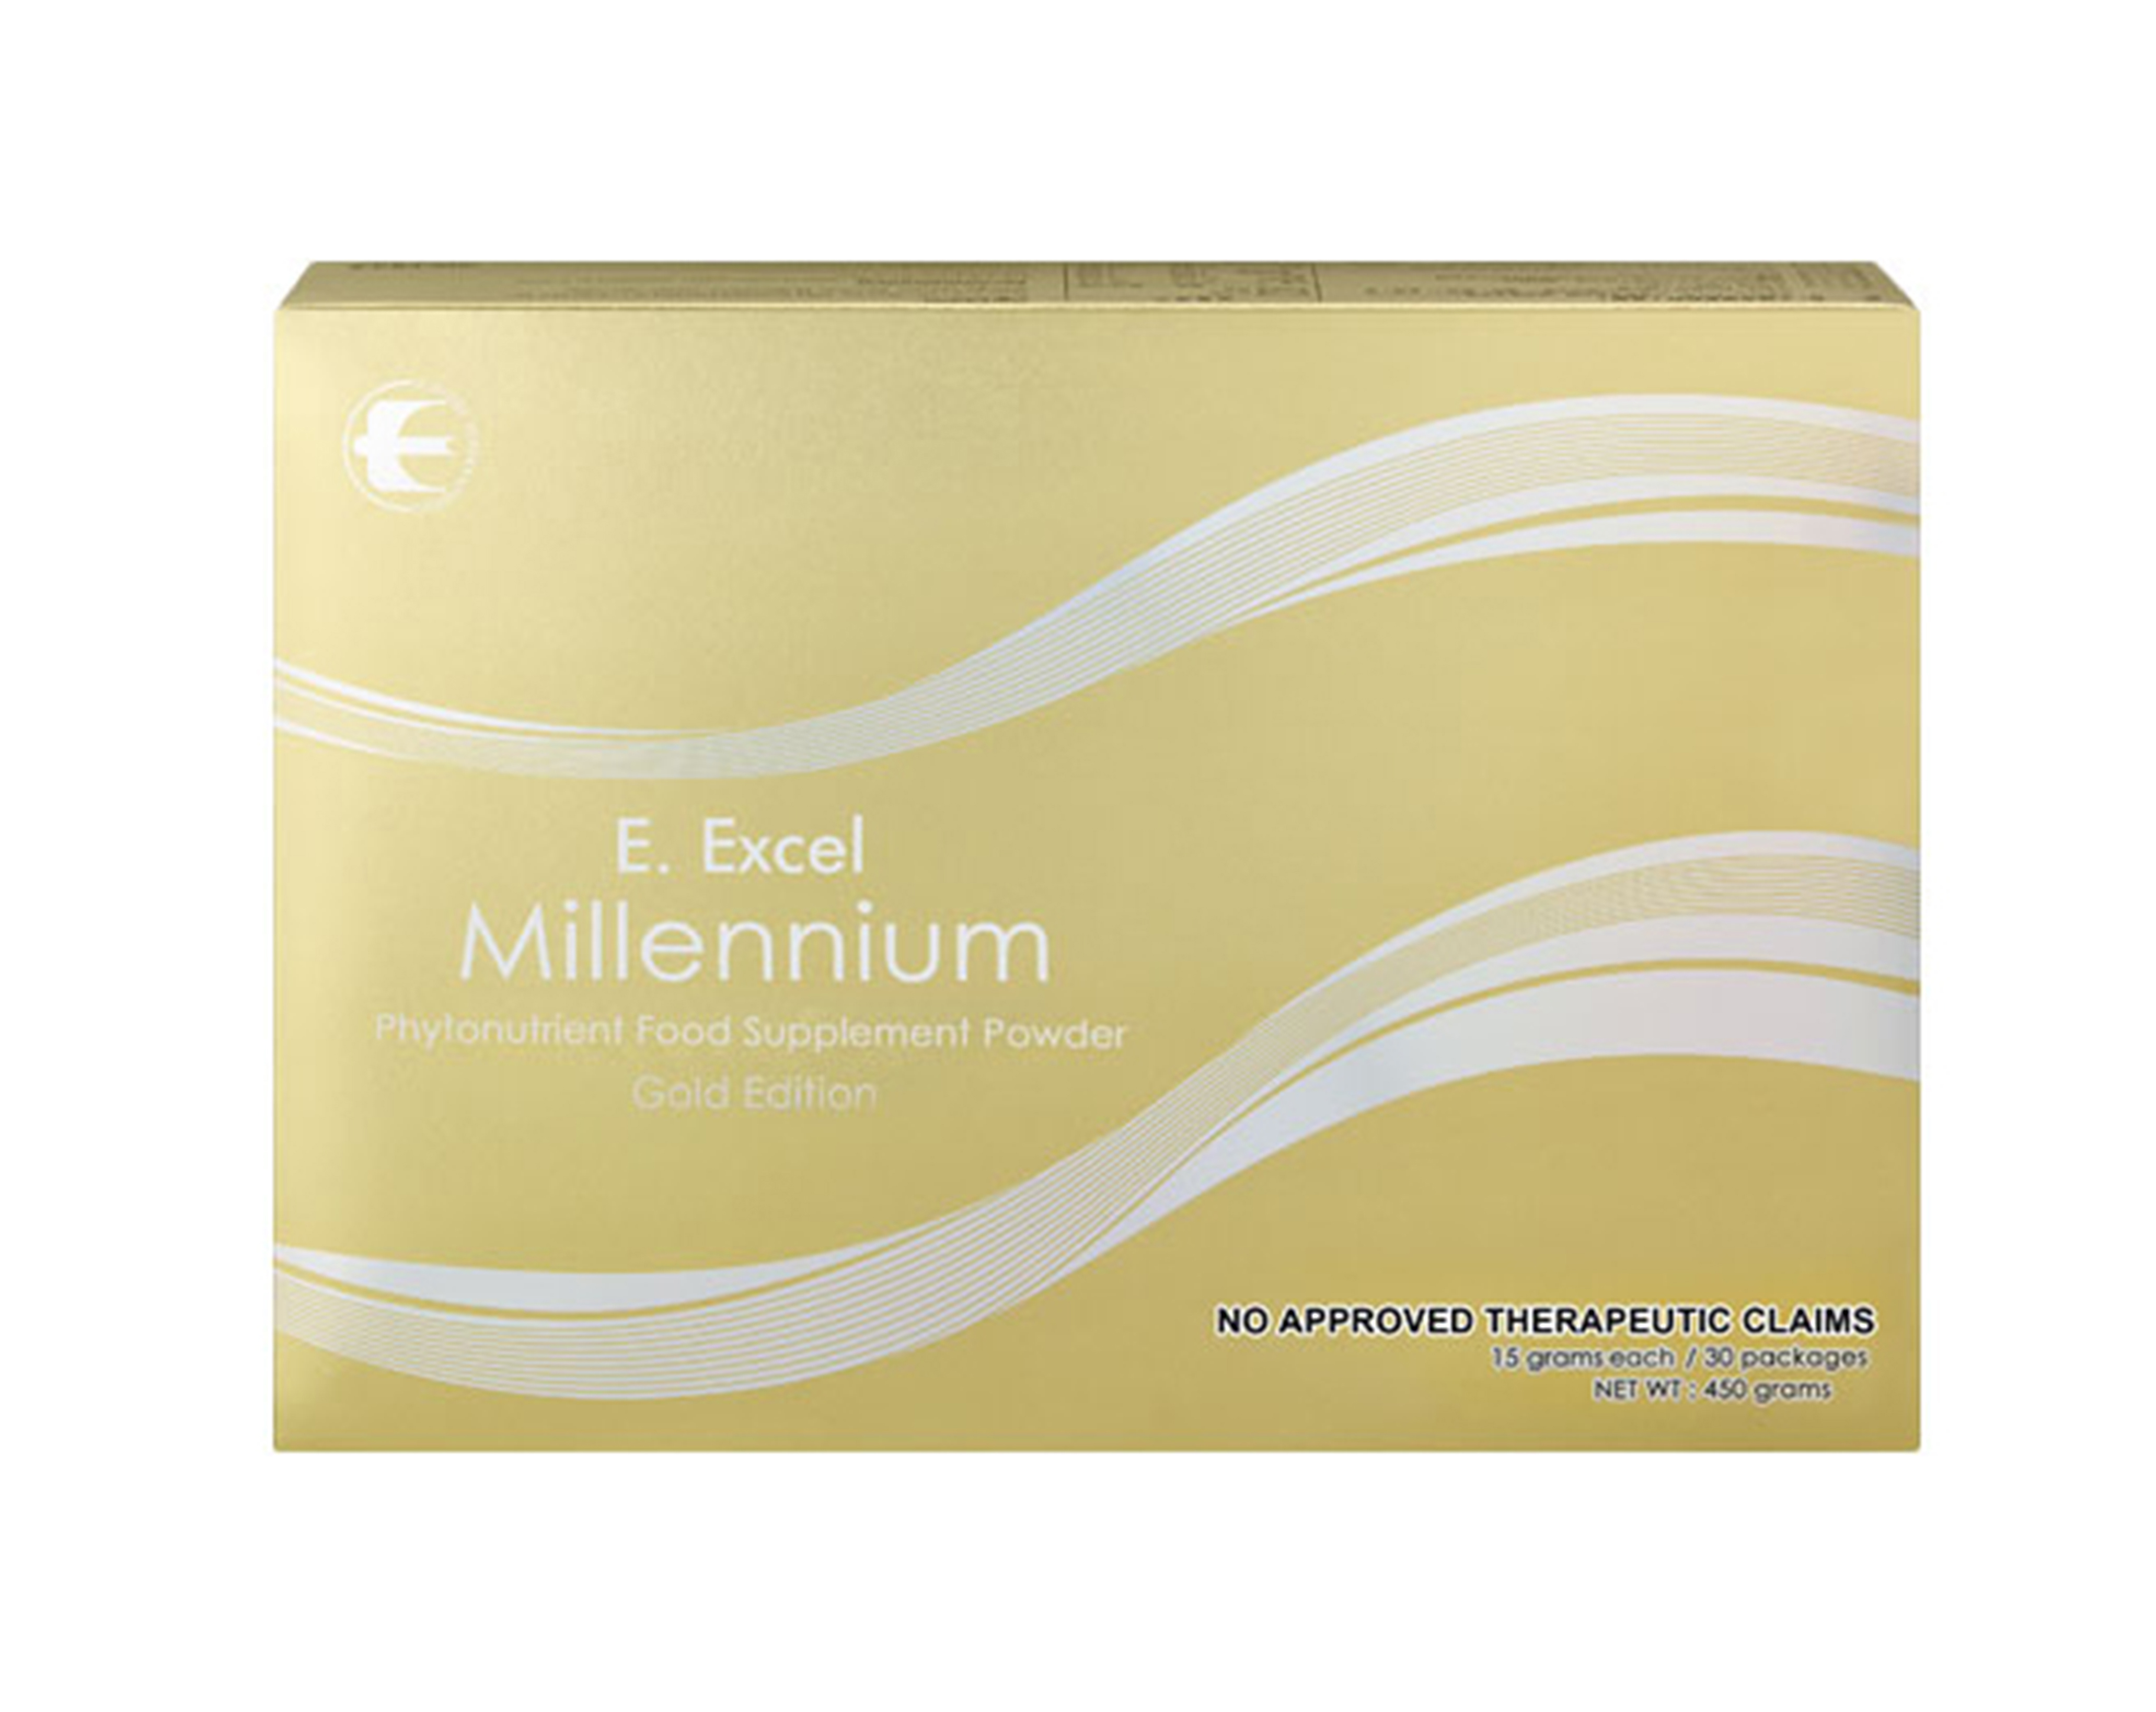 E. Excel Millennium Powder Gold Edition